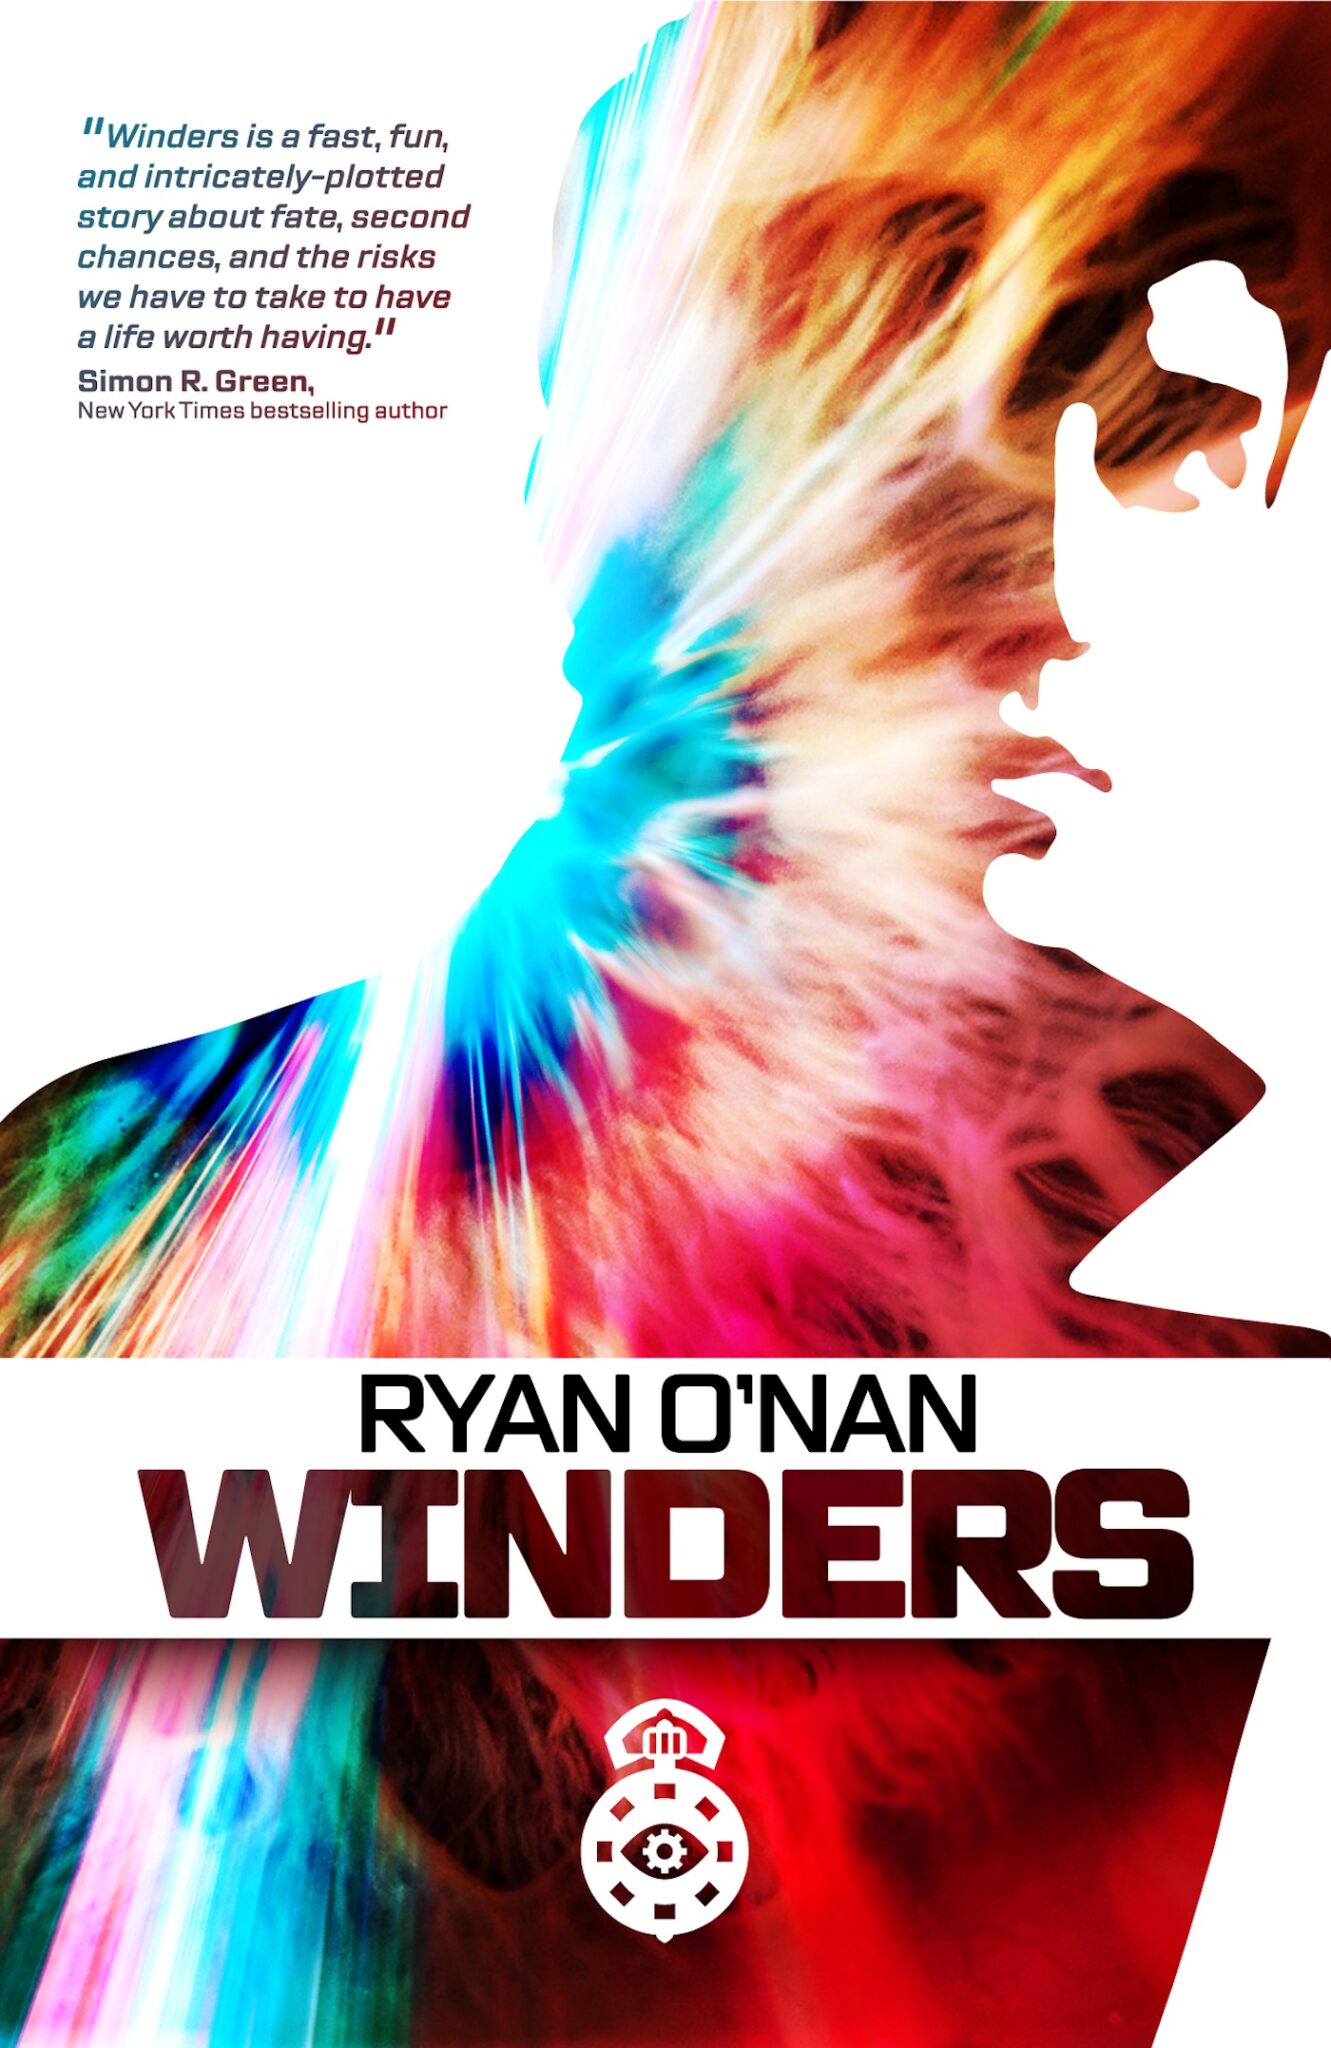 Ryan O’Nan: Five Things I Learned Writing Winders